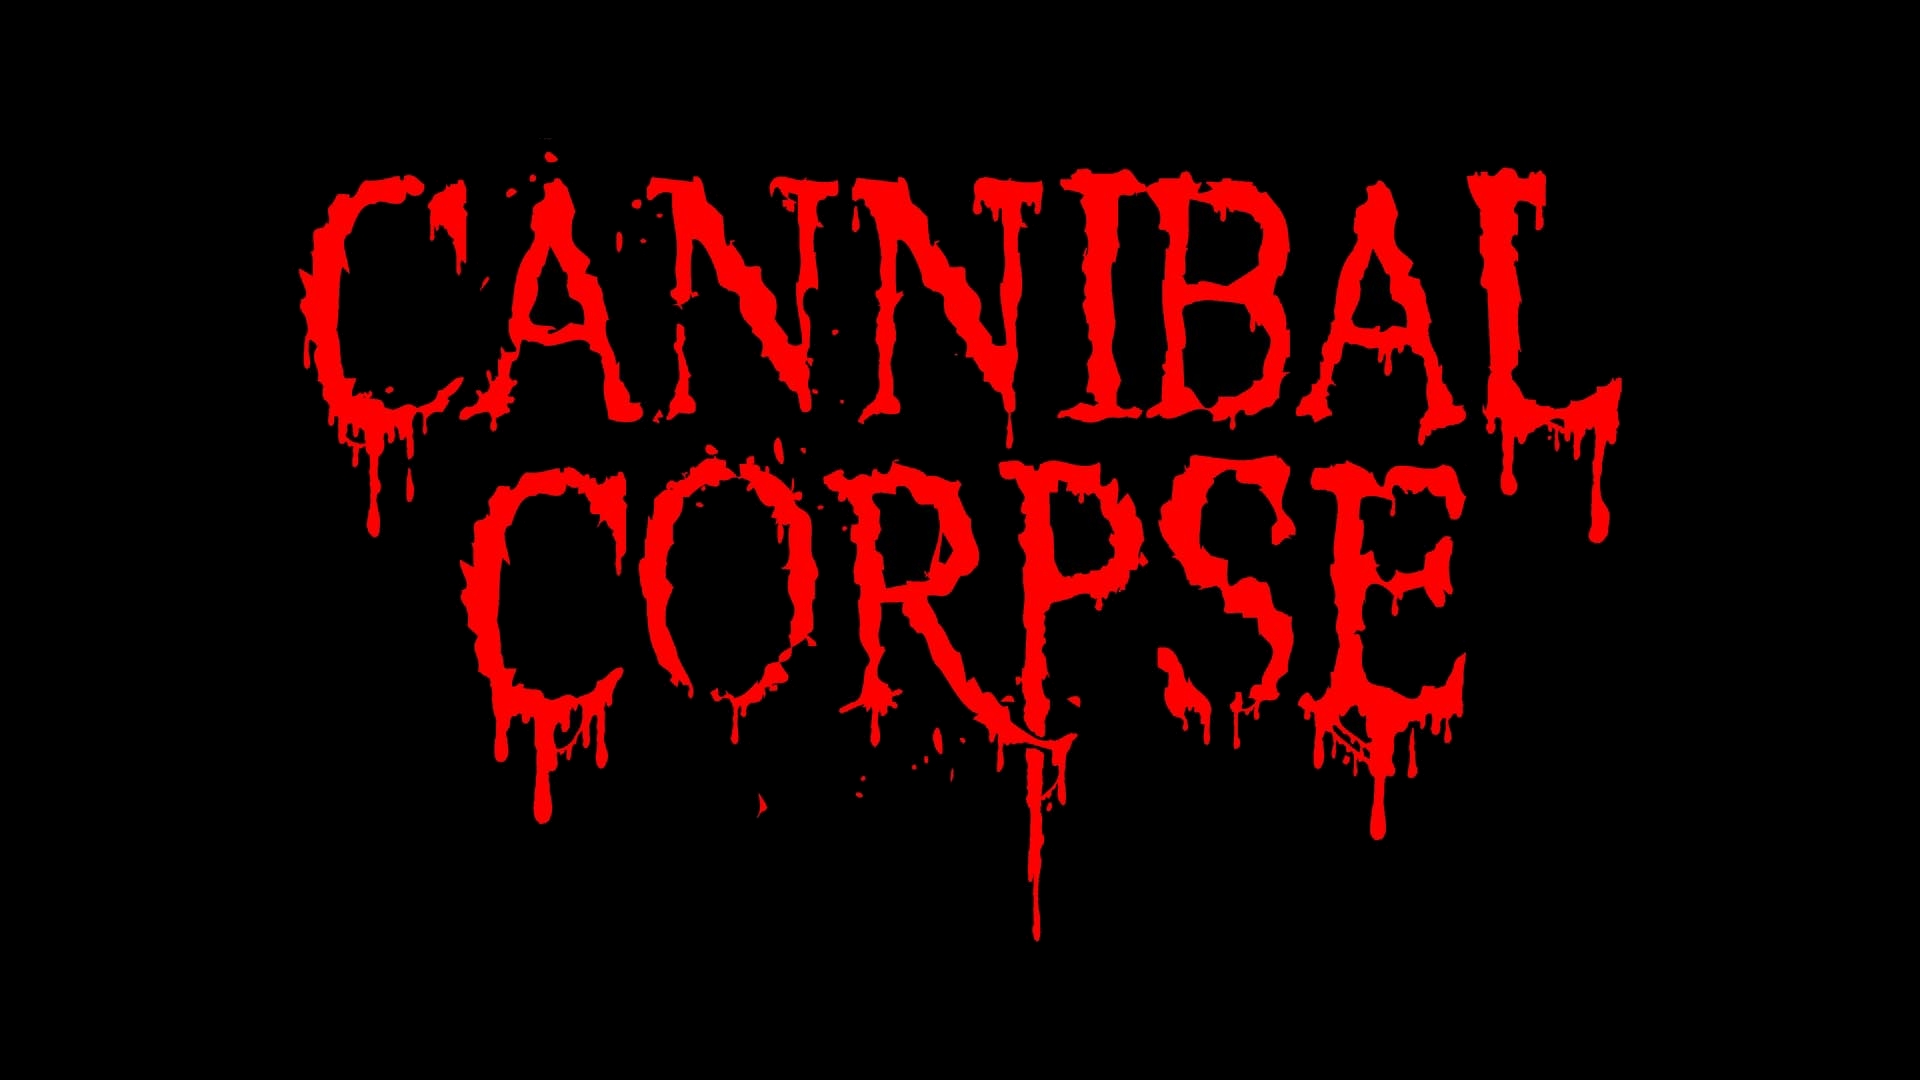 Music Cannibal Corpse Wallpaper